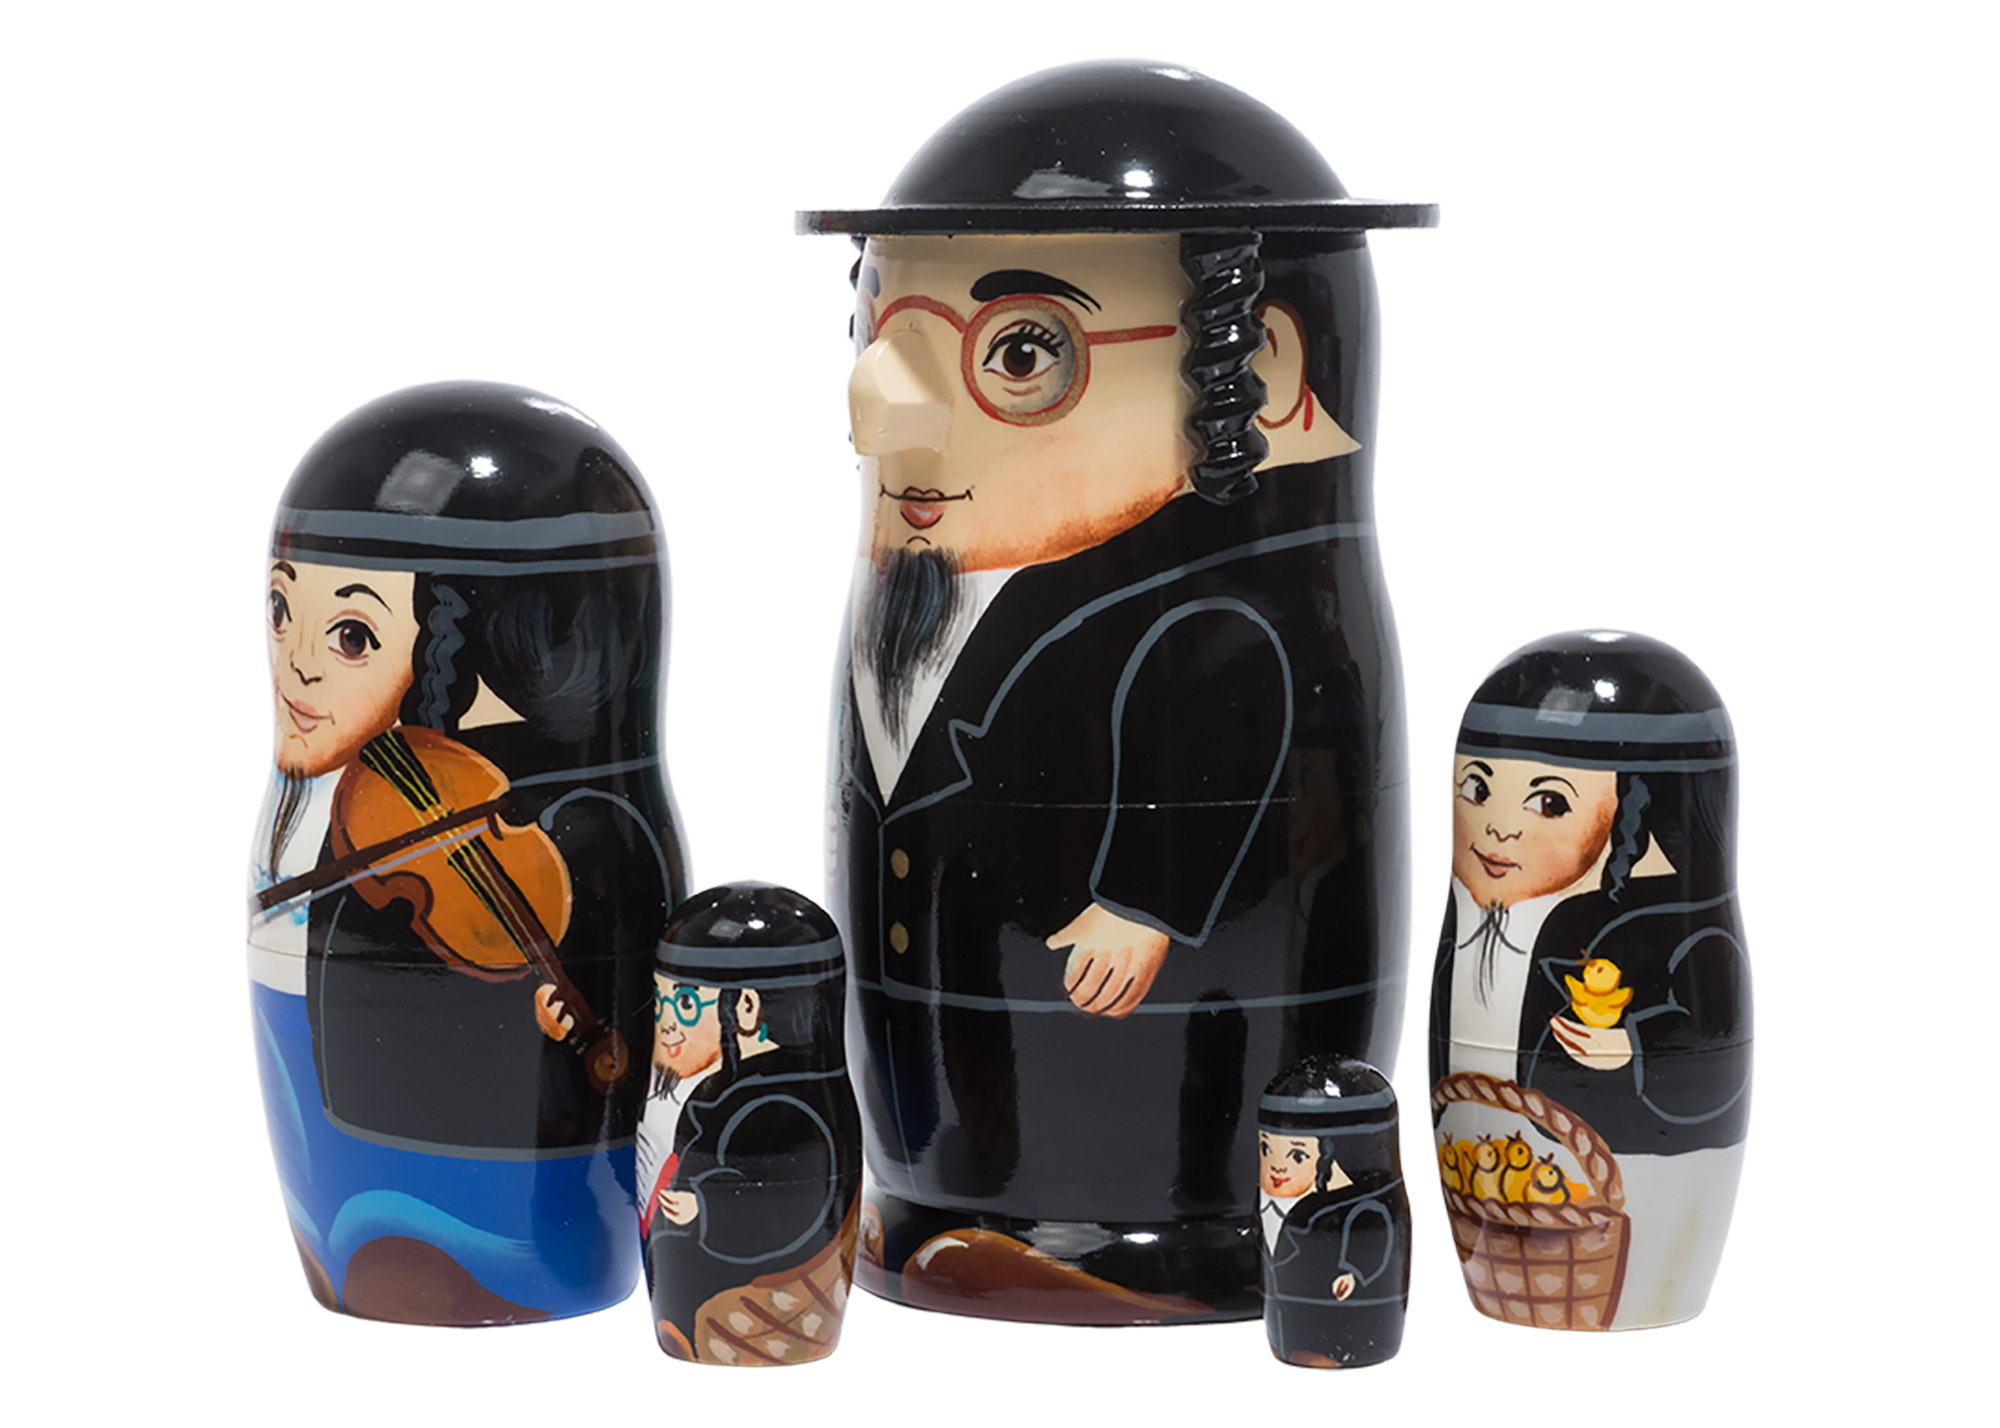 Buy Rabbi Russian Doll 5pc./5"  at GoldenCockerel.com